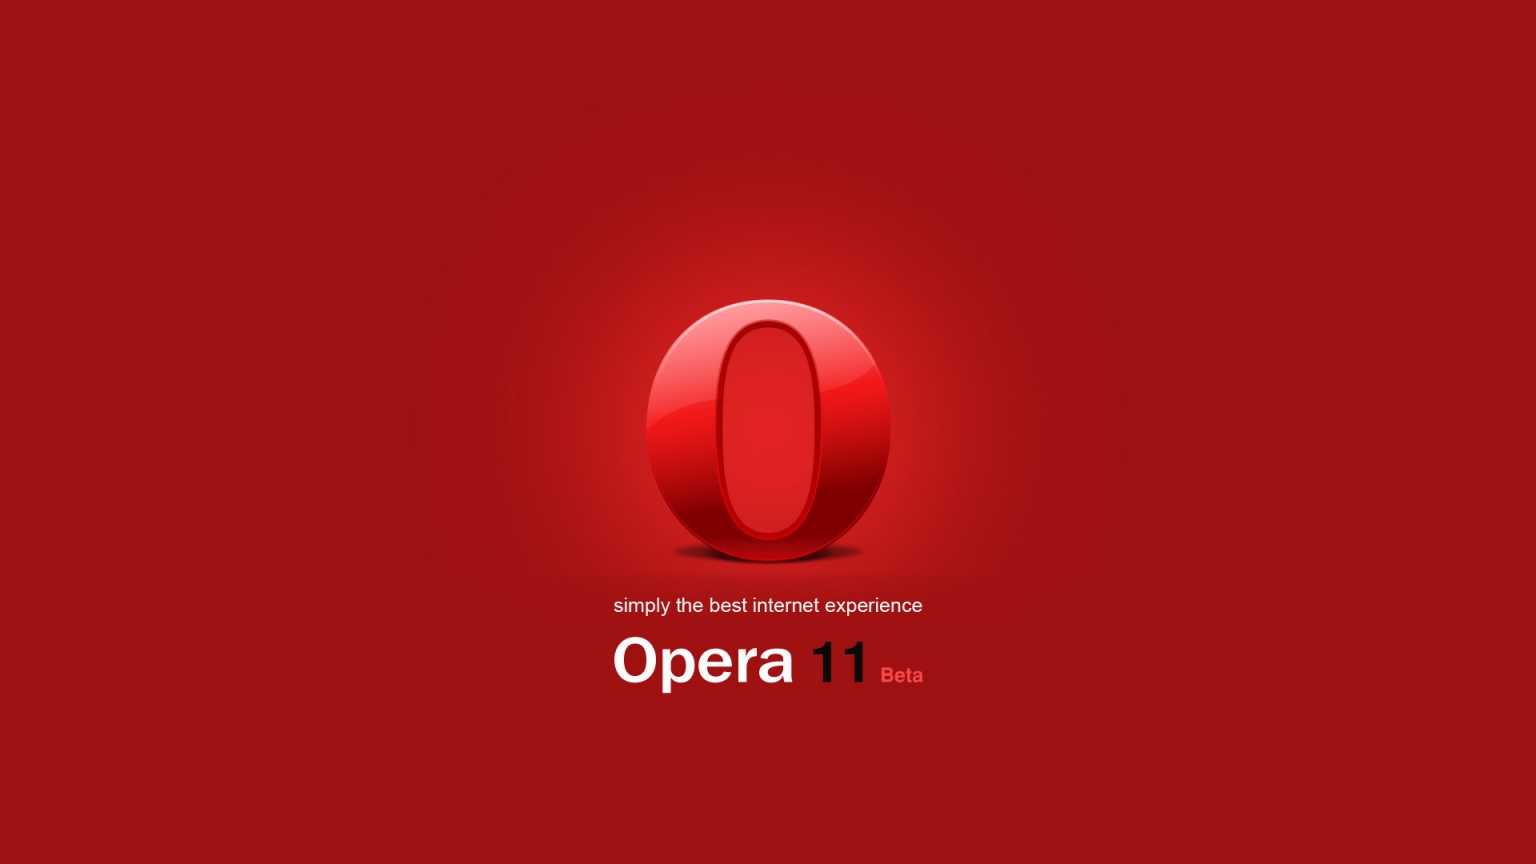 Opera 11 Beta for 1536 x 864 HDTV resolution